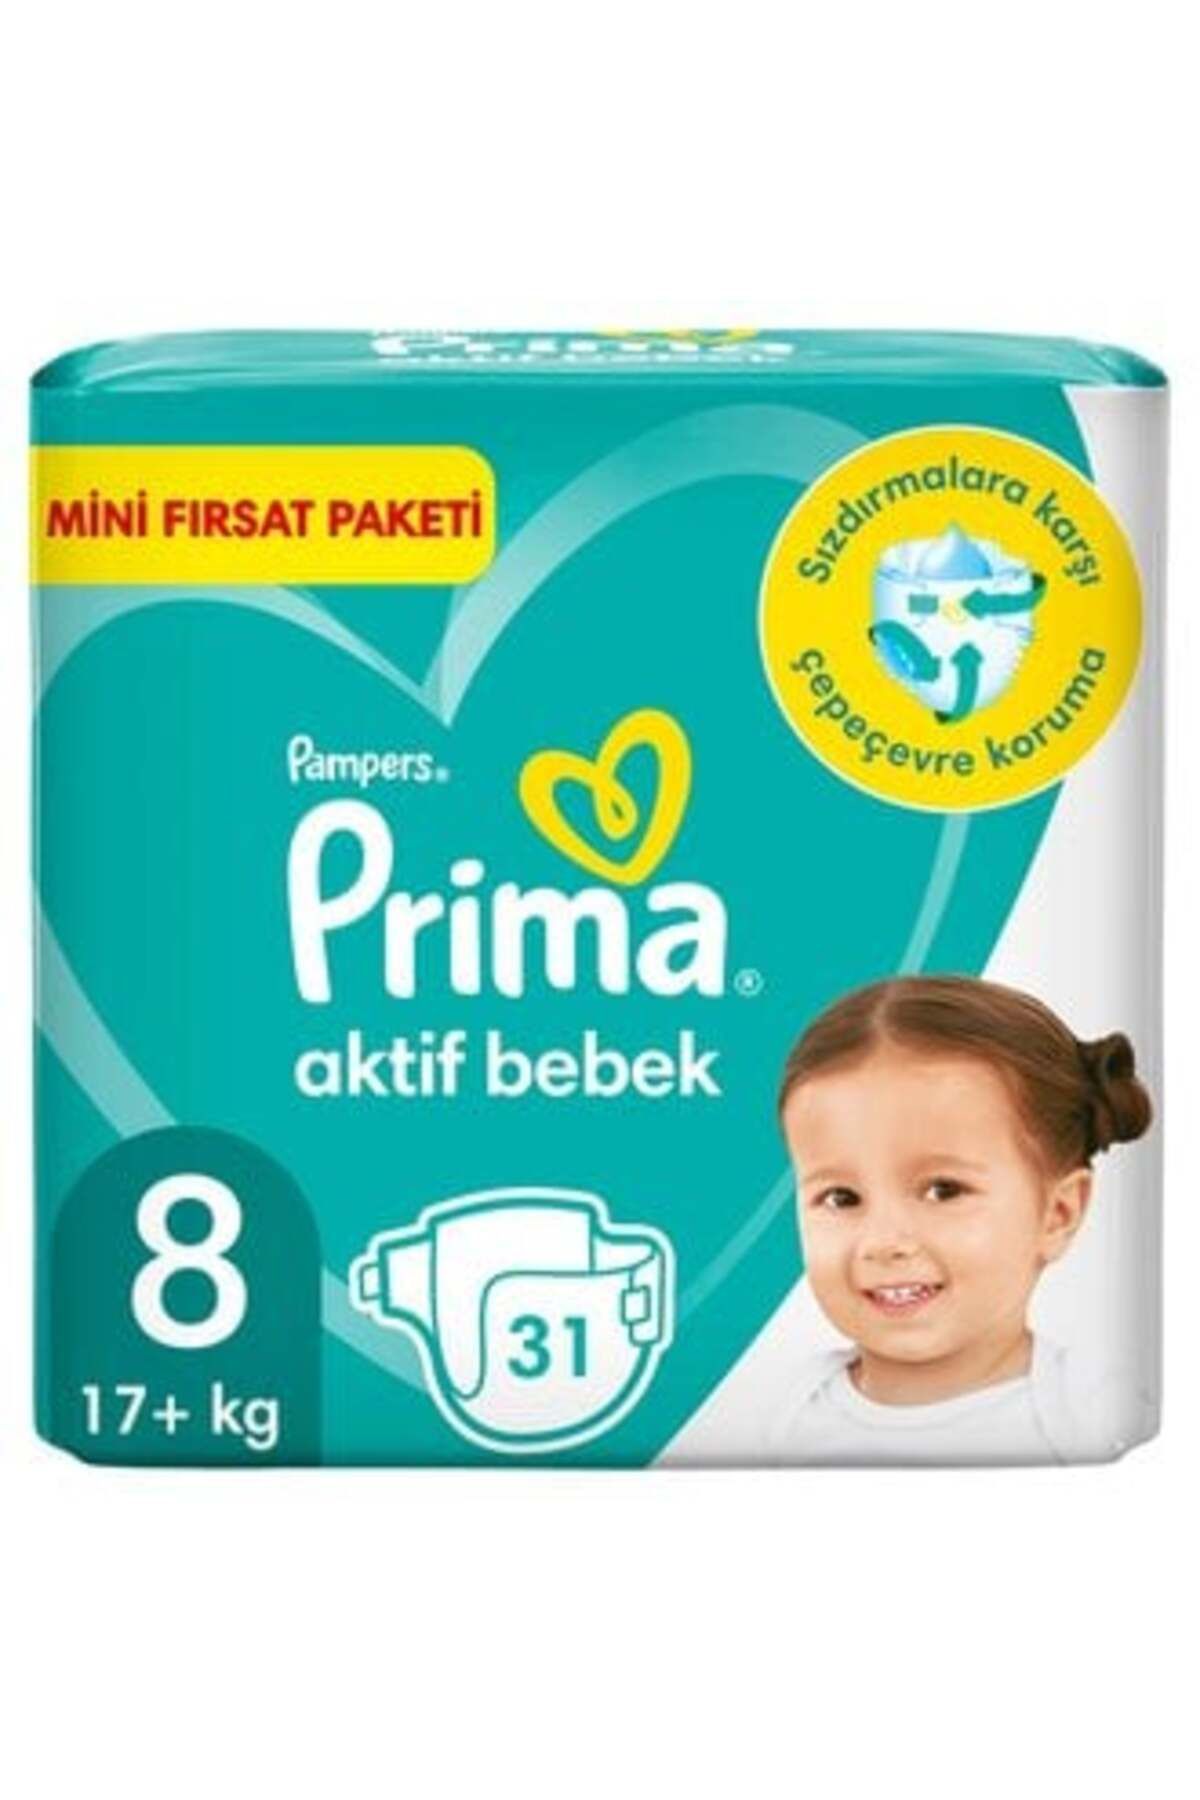 Prima Prıma Aktif Bebek Fırsat Paket 8 Beden 3Xl 17+ Kg 31'Lı ( 5 ADET )